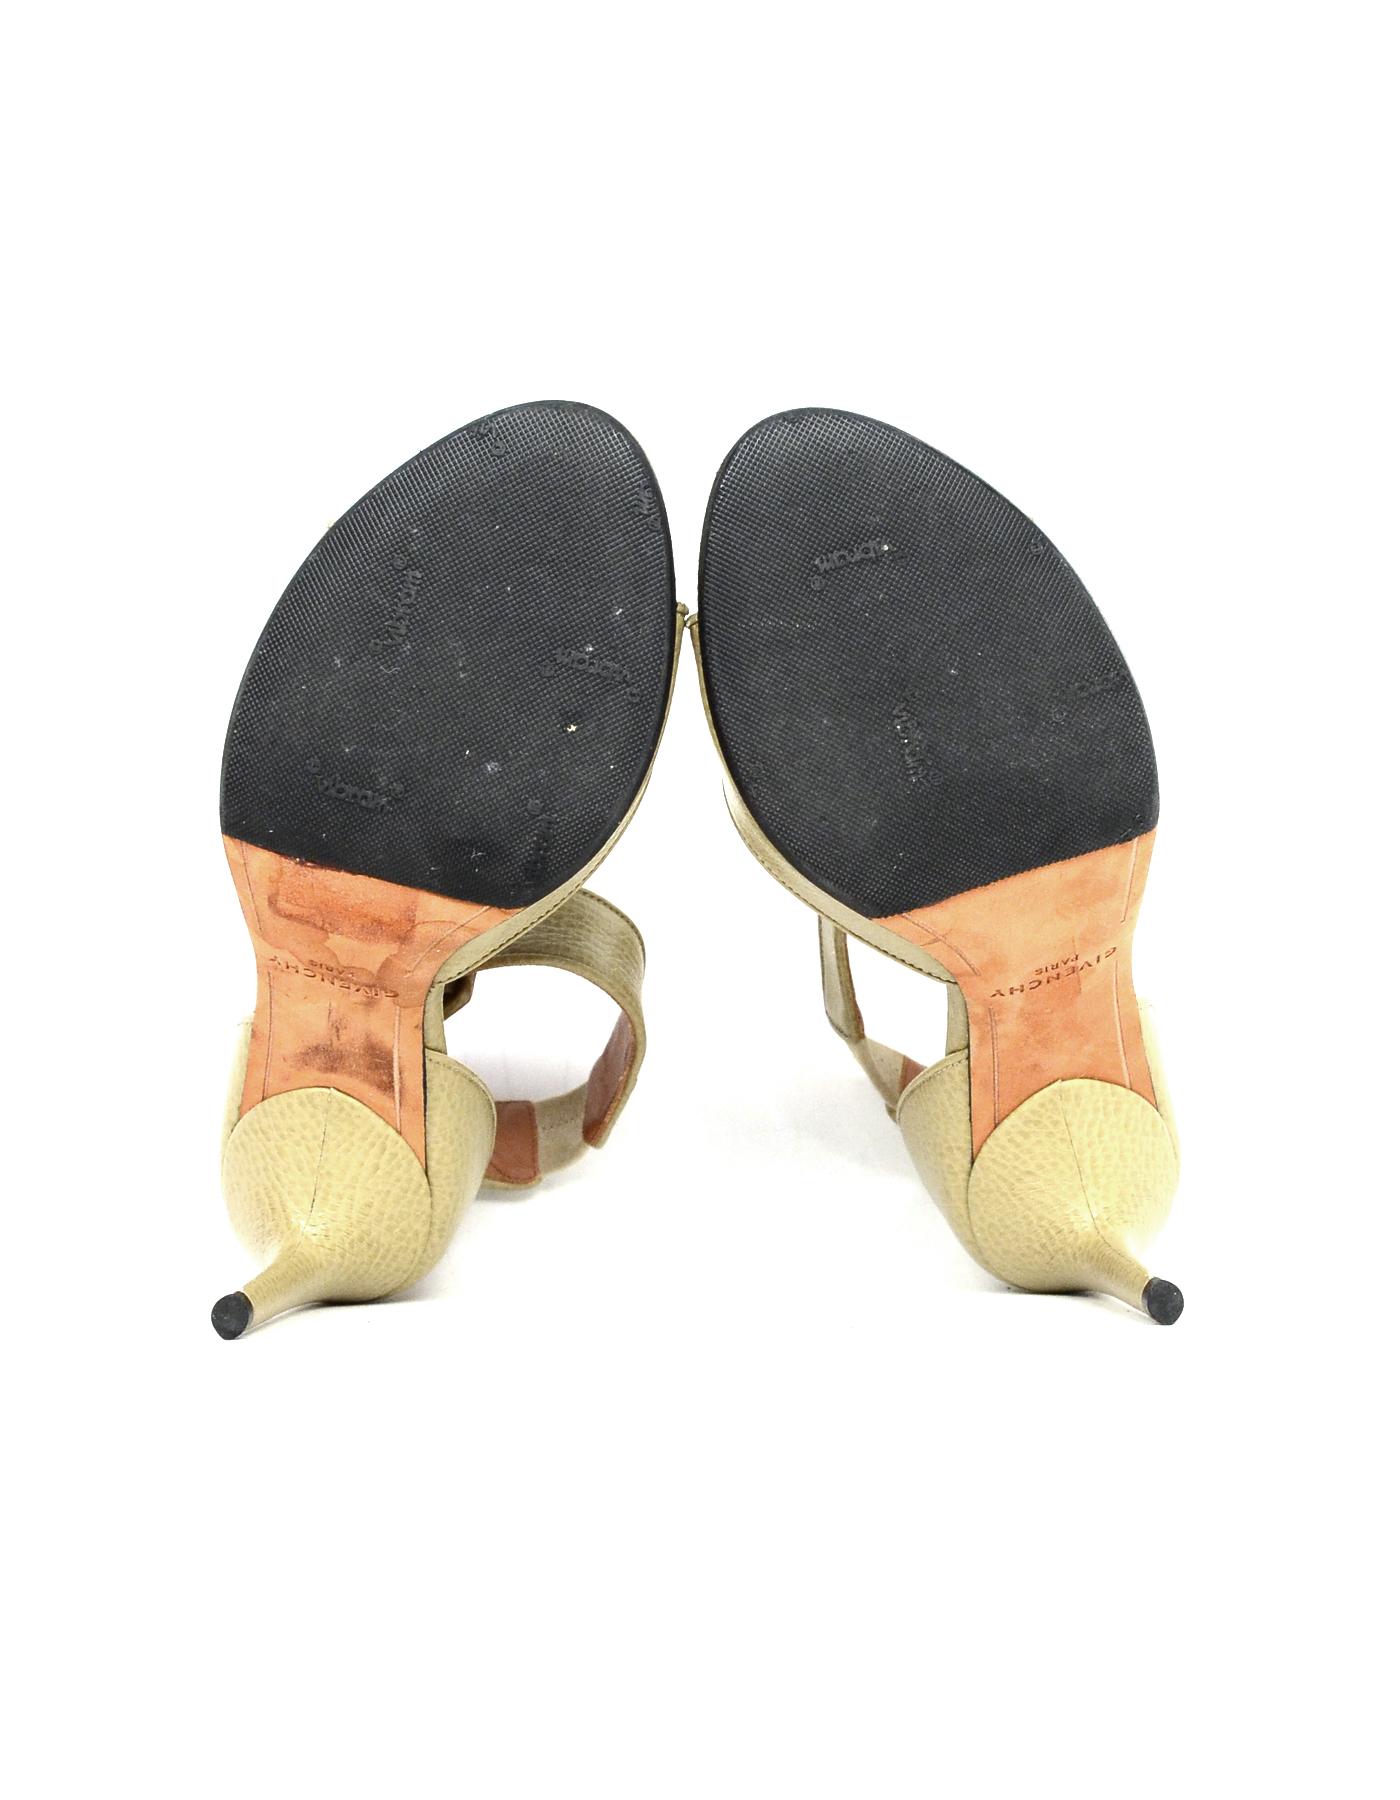 Givenchy Khaki Pebbled Leather Shark Tooth Sandals Sz 5.5 1